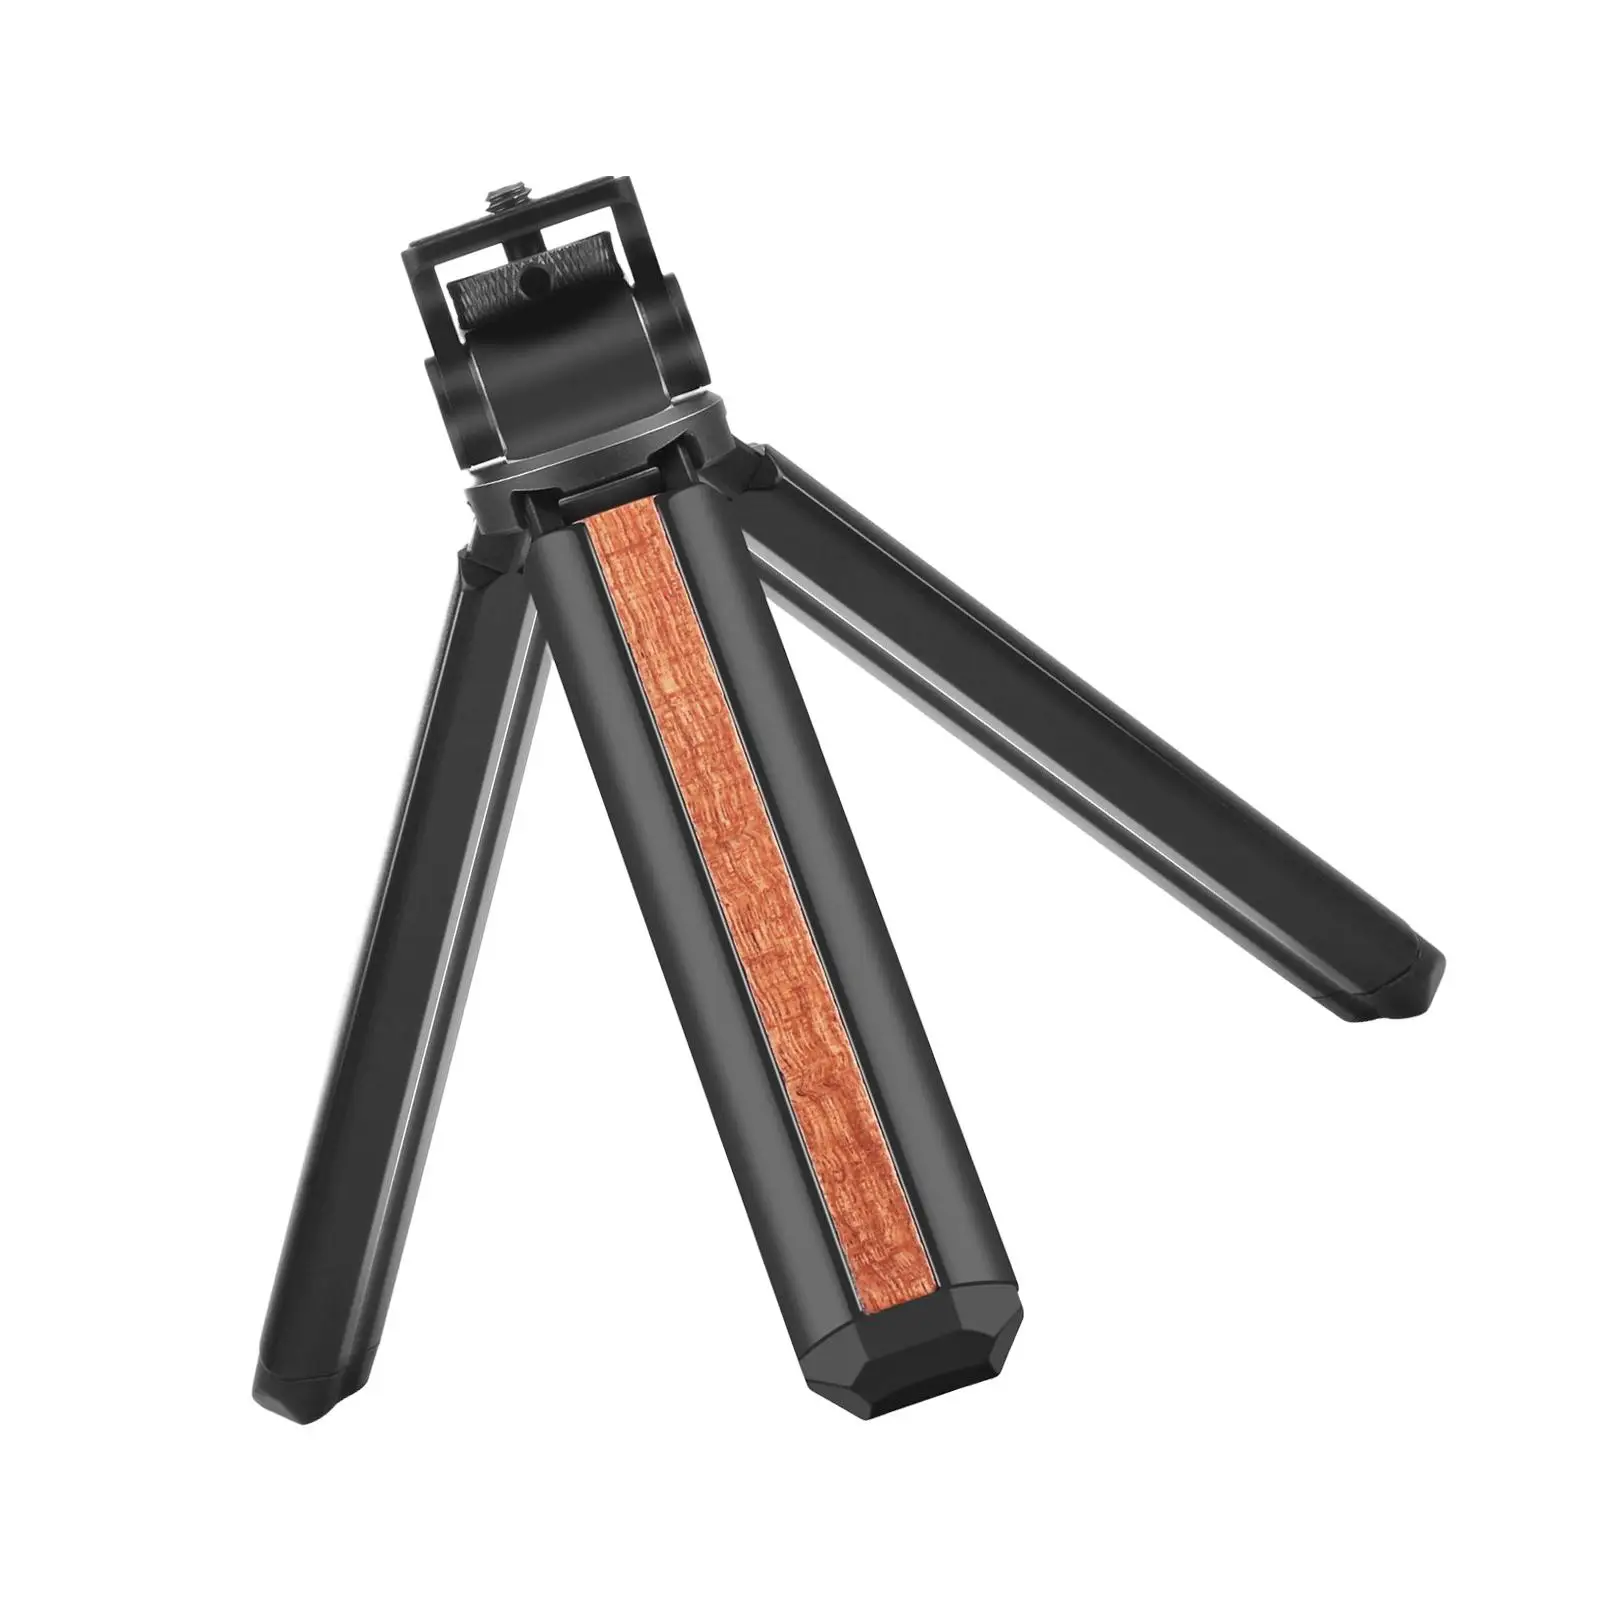 Selfie Tripod Heavy Duty Aluminum Standard 1/4 Screw Flexible Phone Tripod for Live Recording makeup Sports Camera